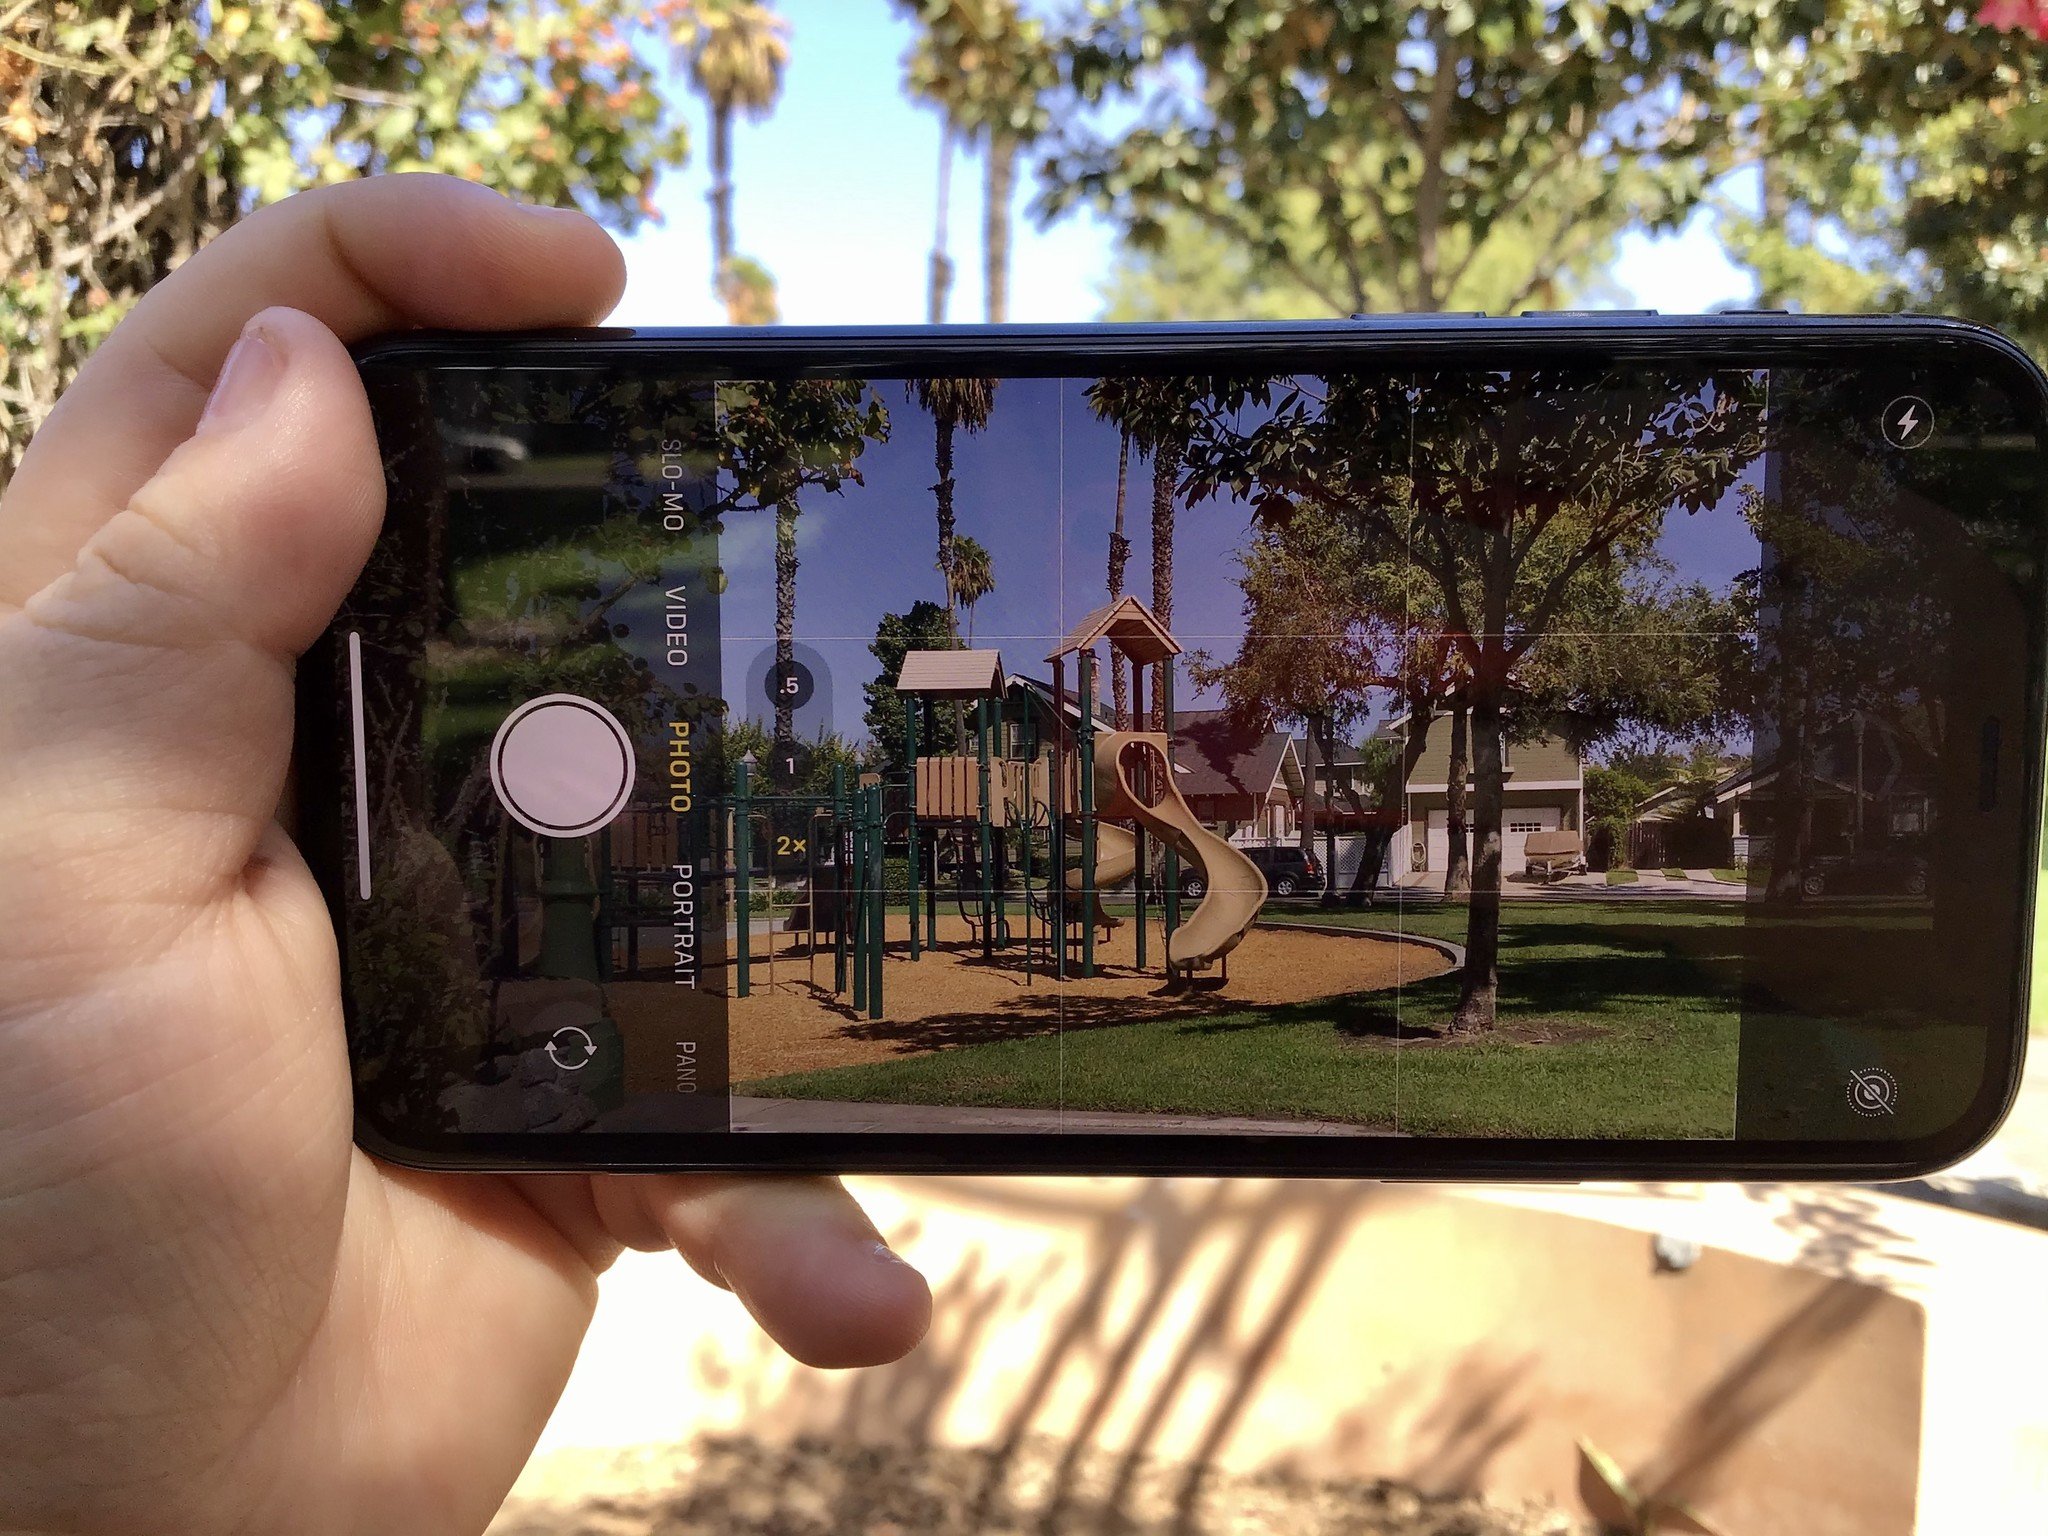 iPhone 11 Pro telephoto capture outside of frame enabled